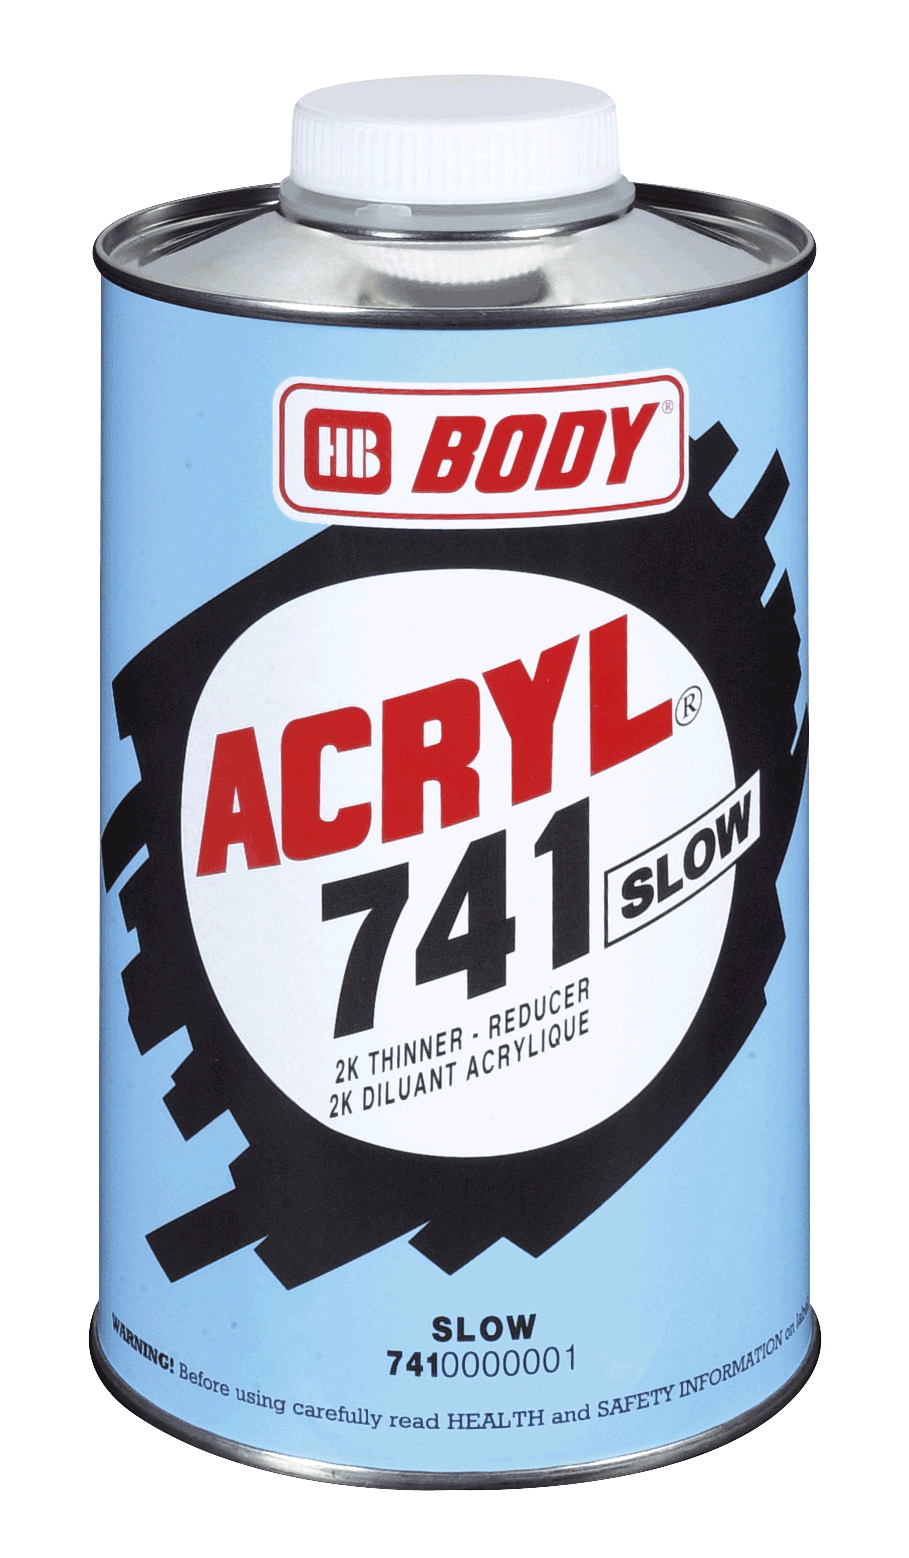 HB BODY Body 741 Acryl thinner slow 1L